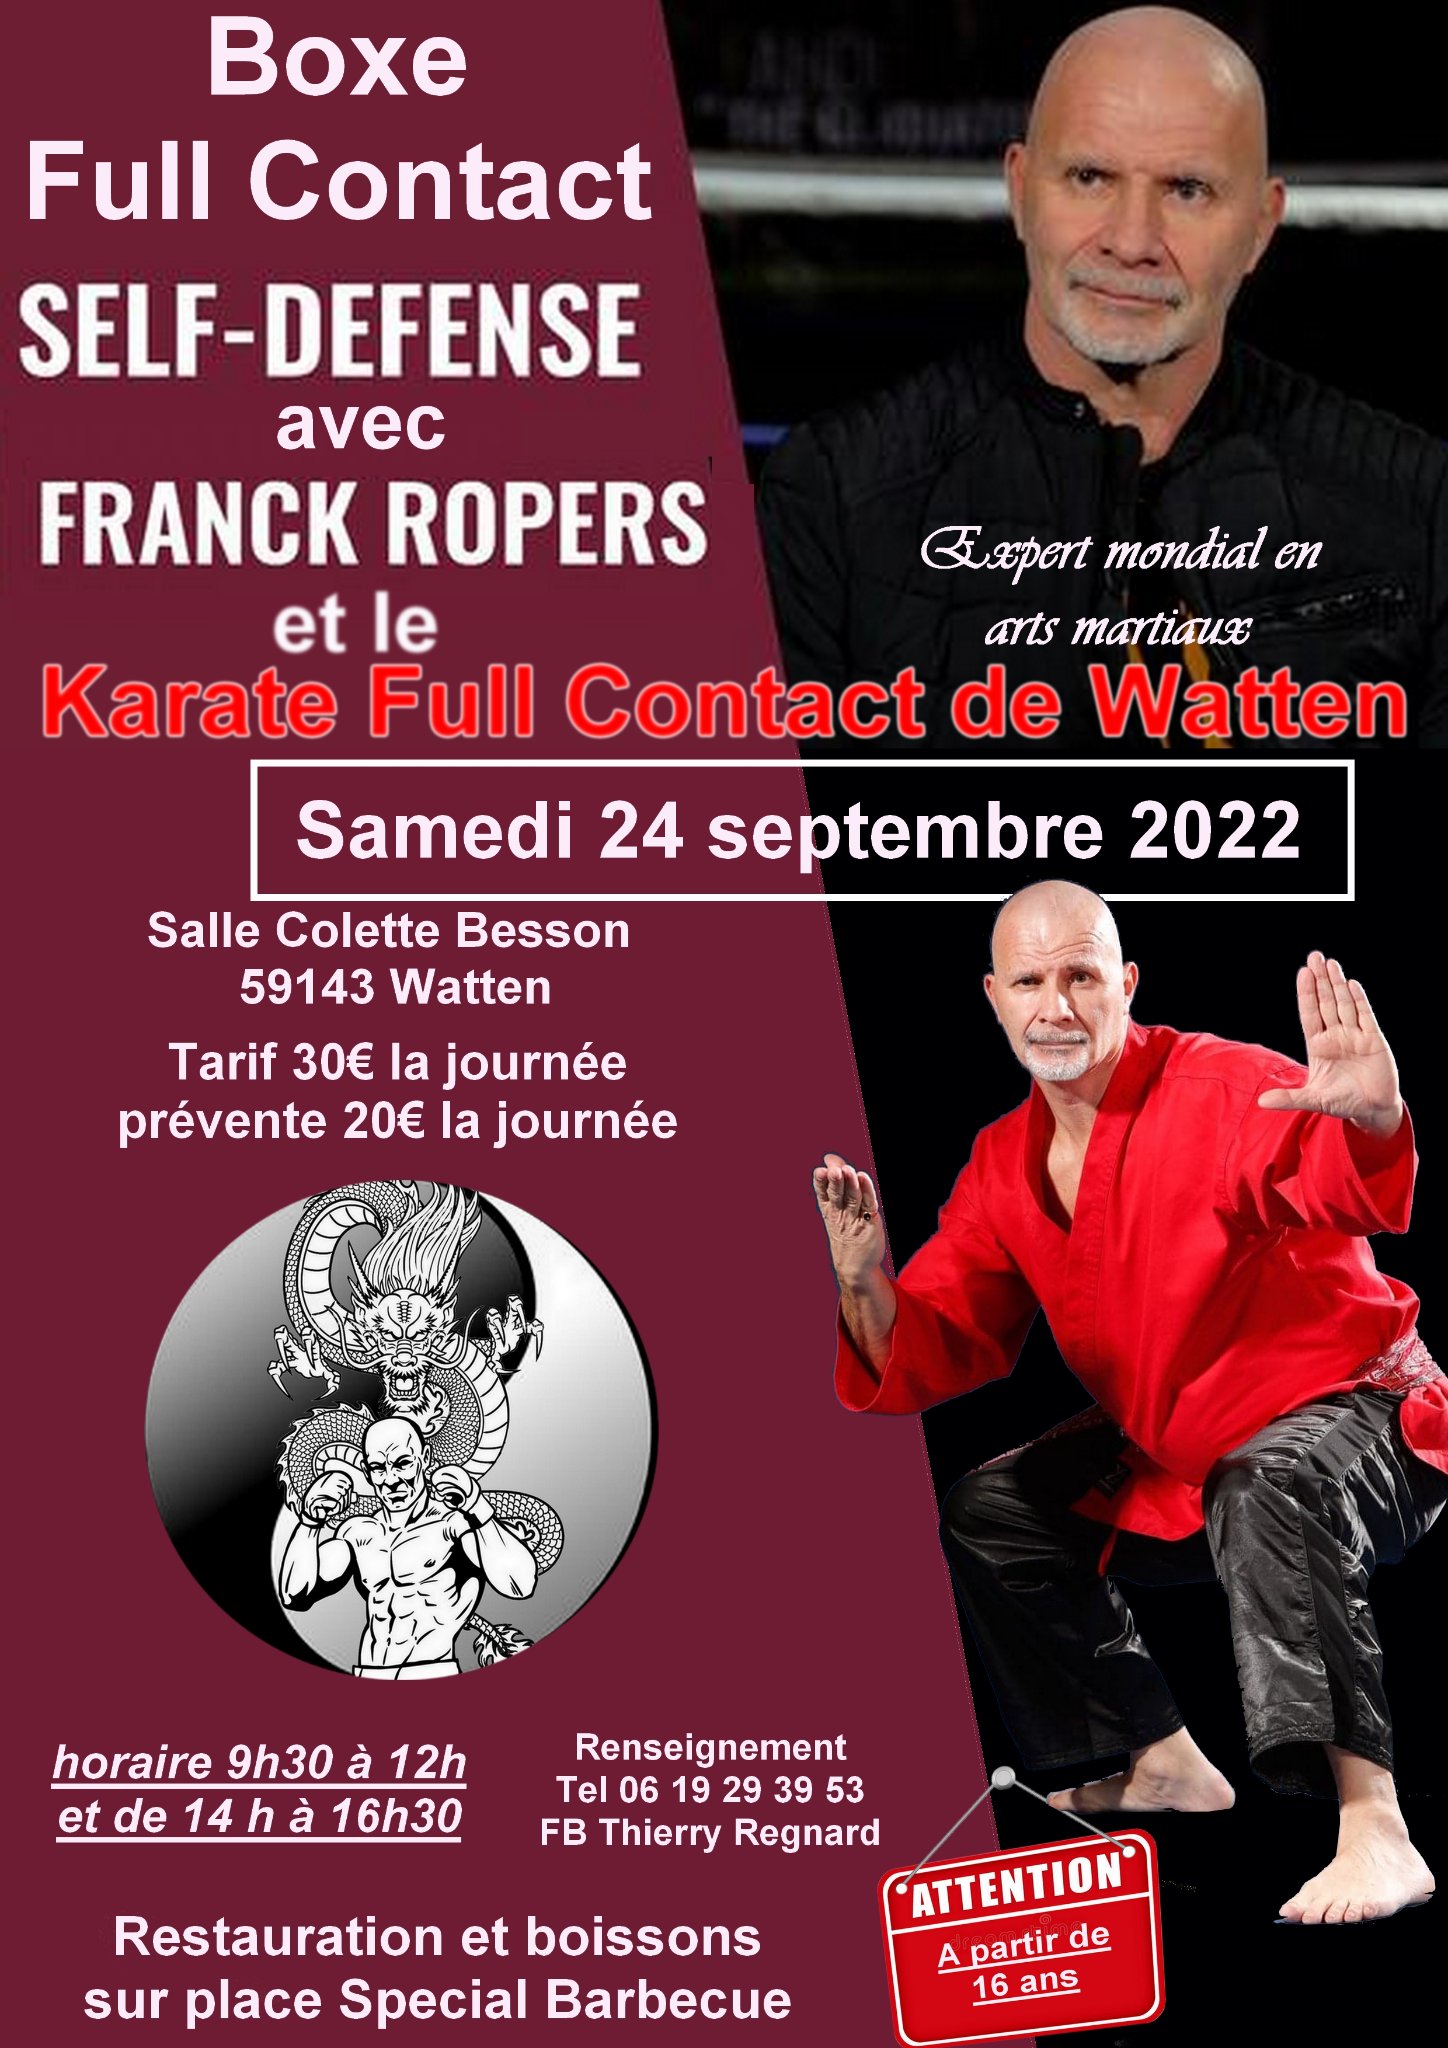 Boxe Full Contact self-défense avec Franck Ropers et le Karaté Full Contact de Watten